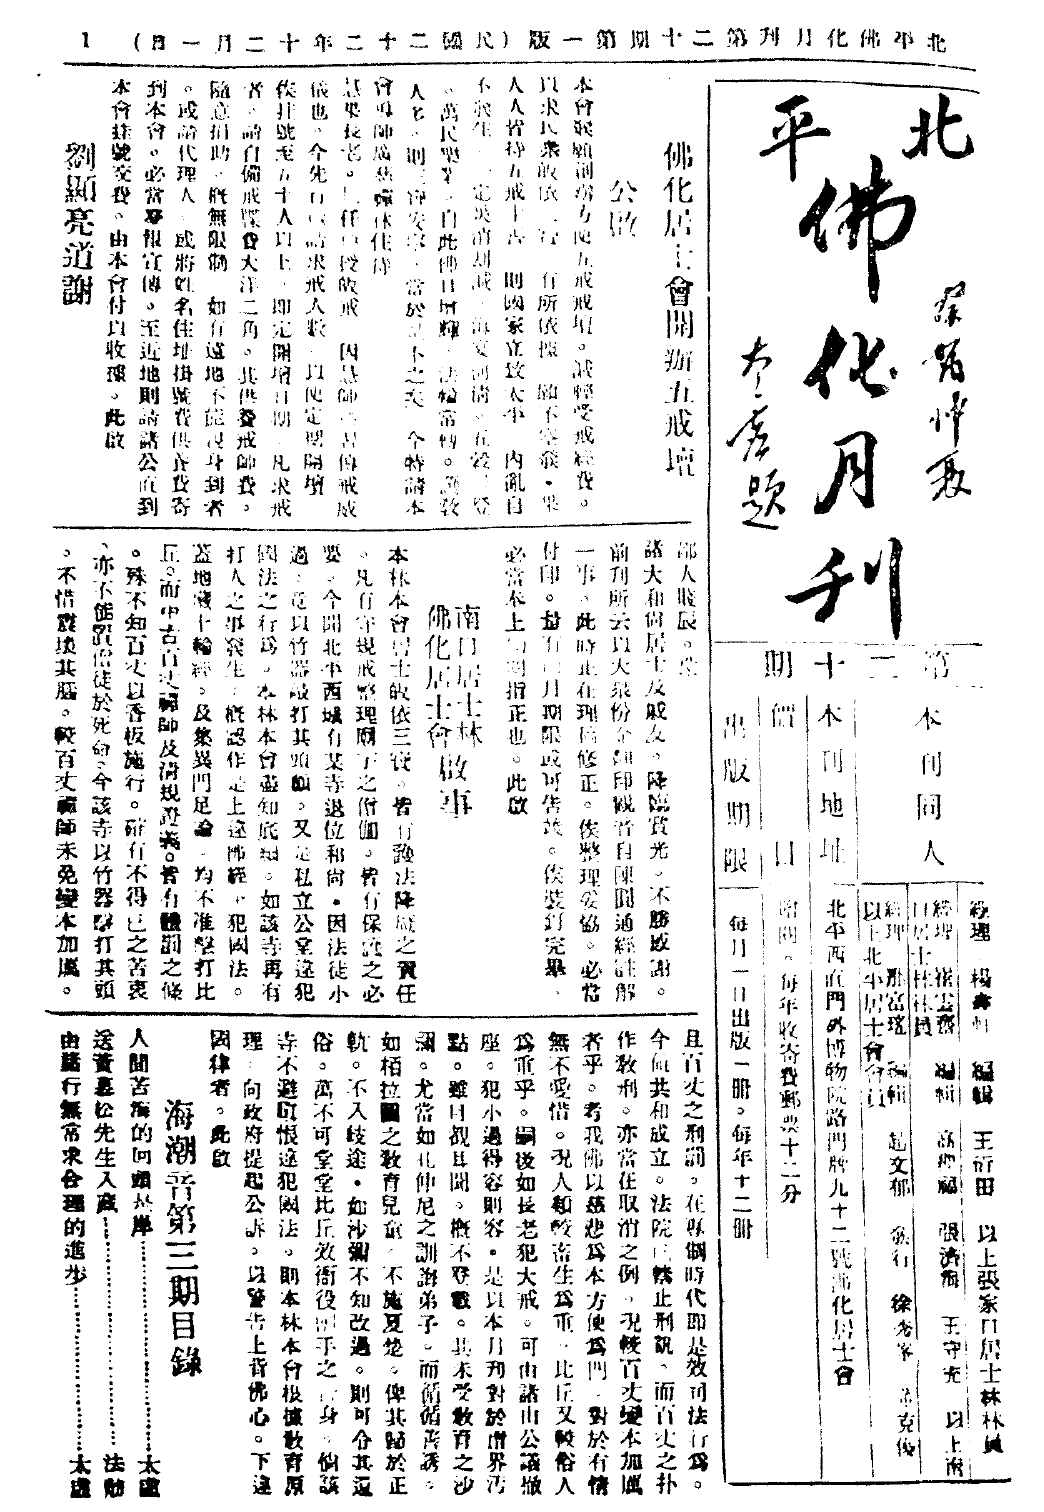 File:Beiping fohua yuekan cover.png